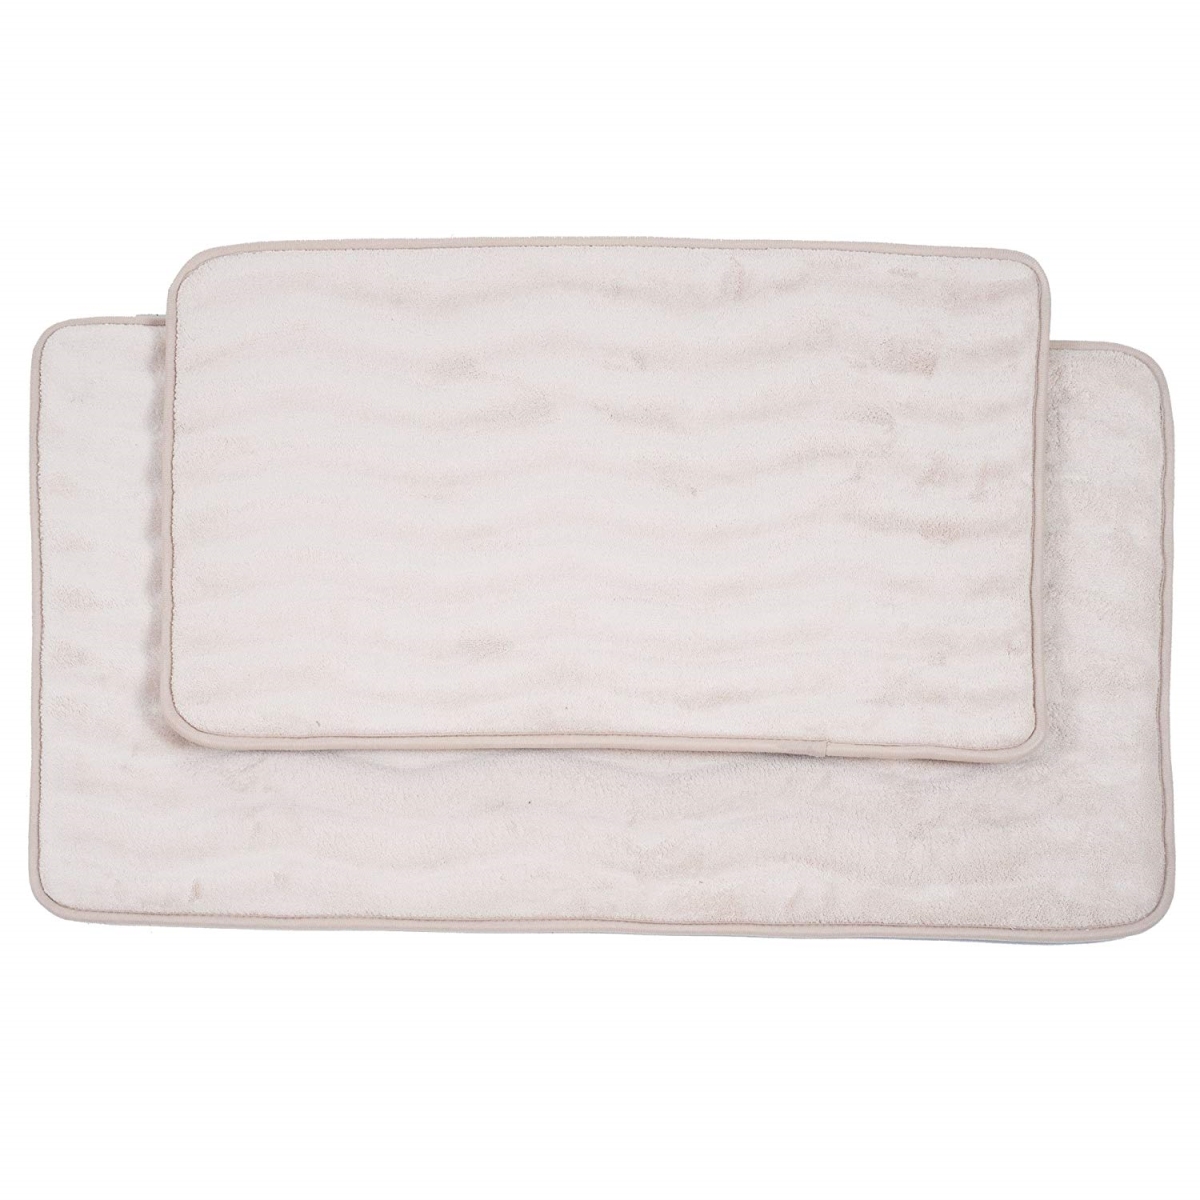 67a-26556 2 Piece Memory Foam Bath Mat Set, Ivory